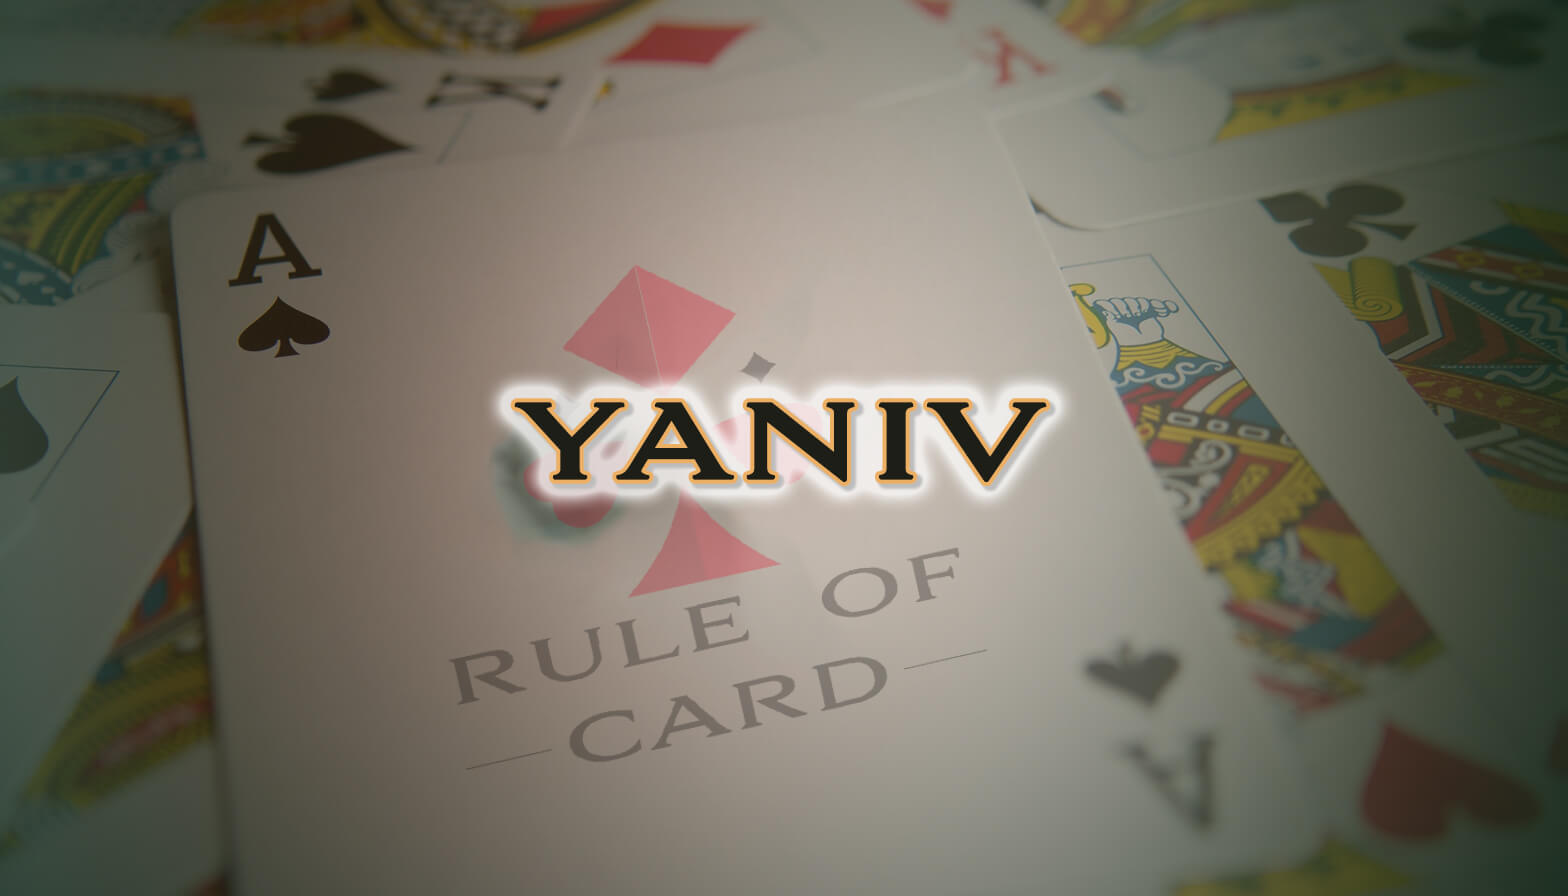 Playing the card game Yaniv